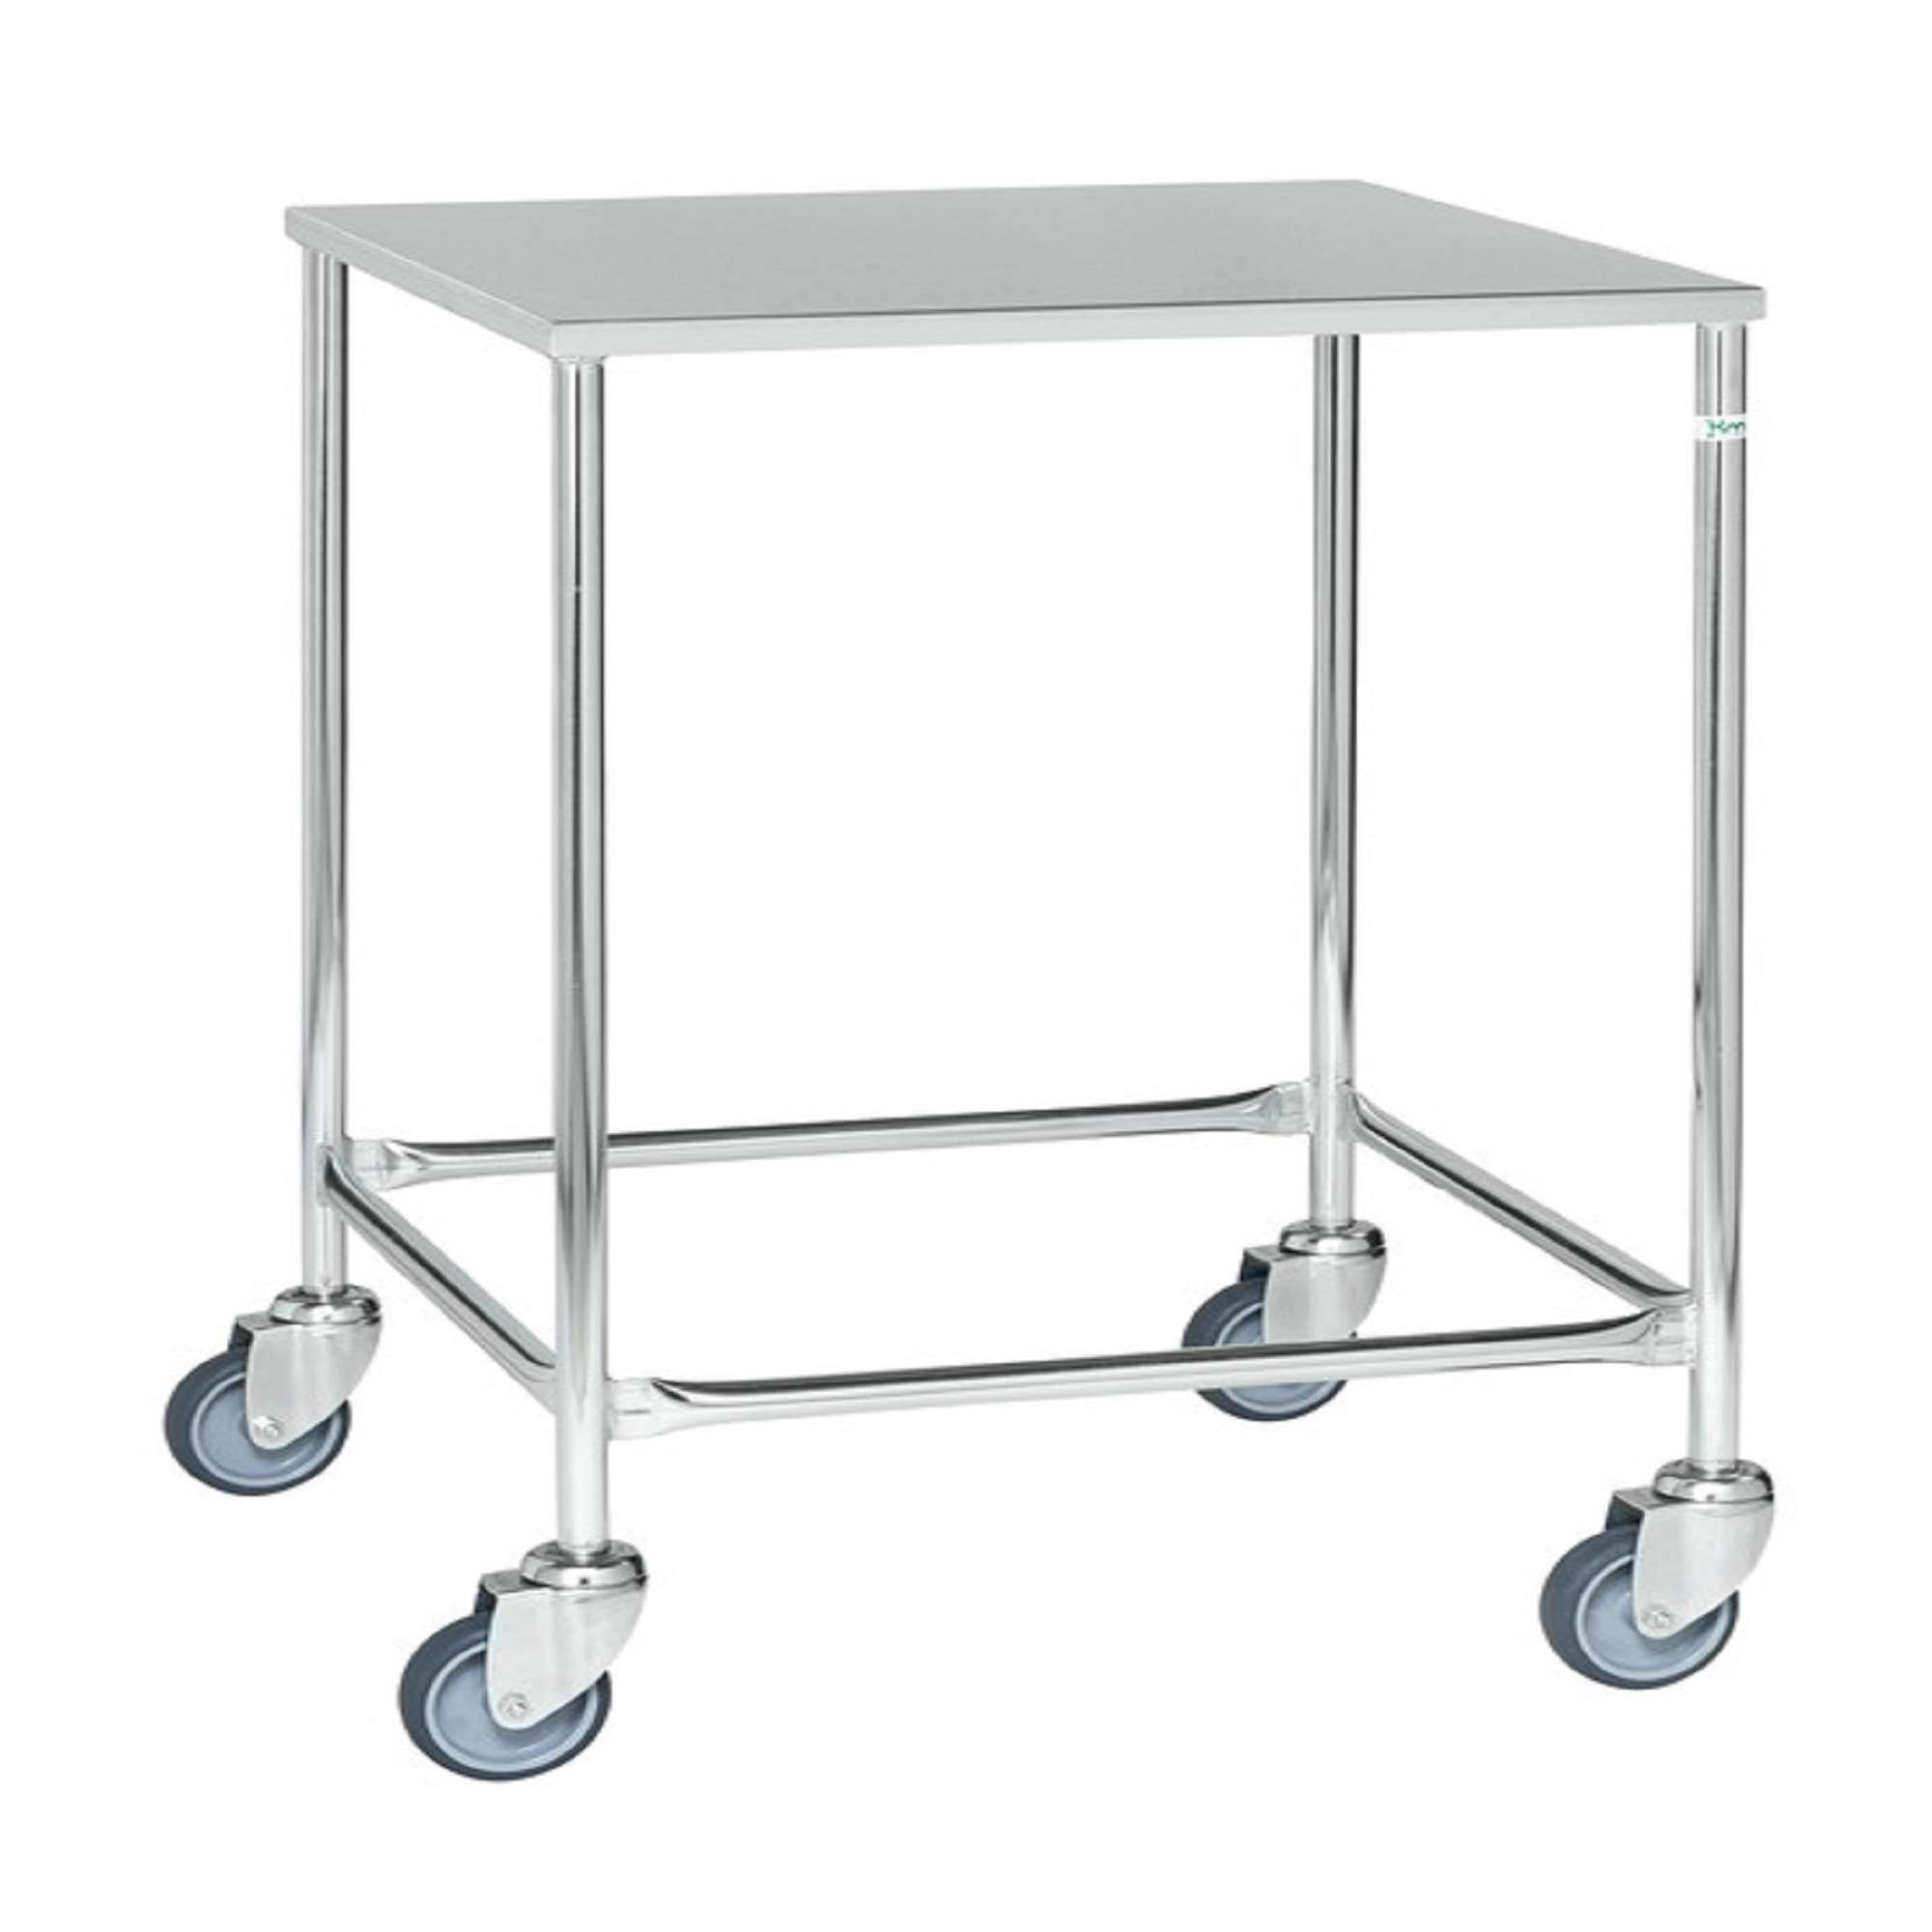 Roll table L x W X H (mm) 605x605x885, 4 swivel 2 with brake, capacity 150kg